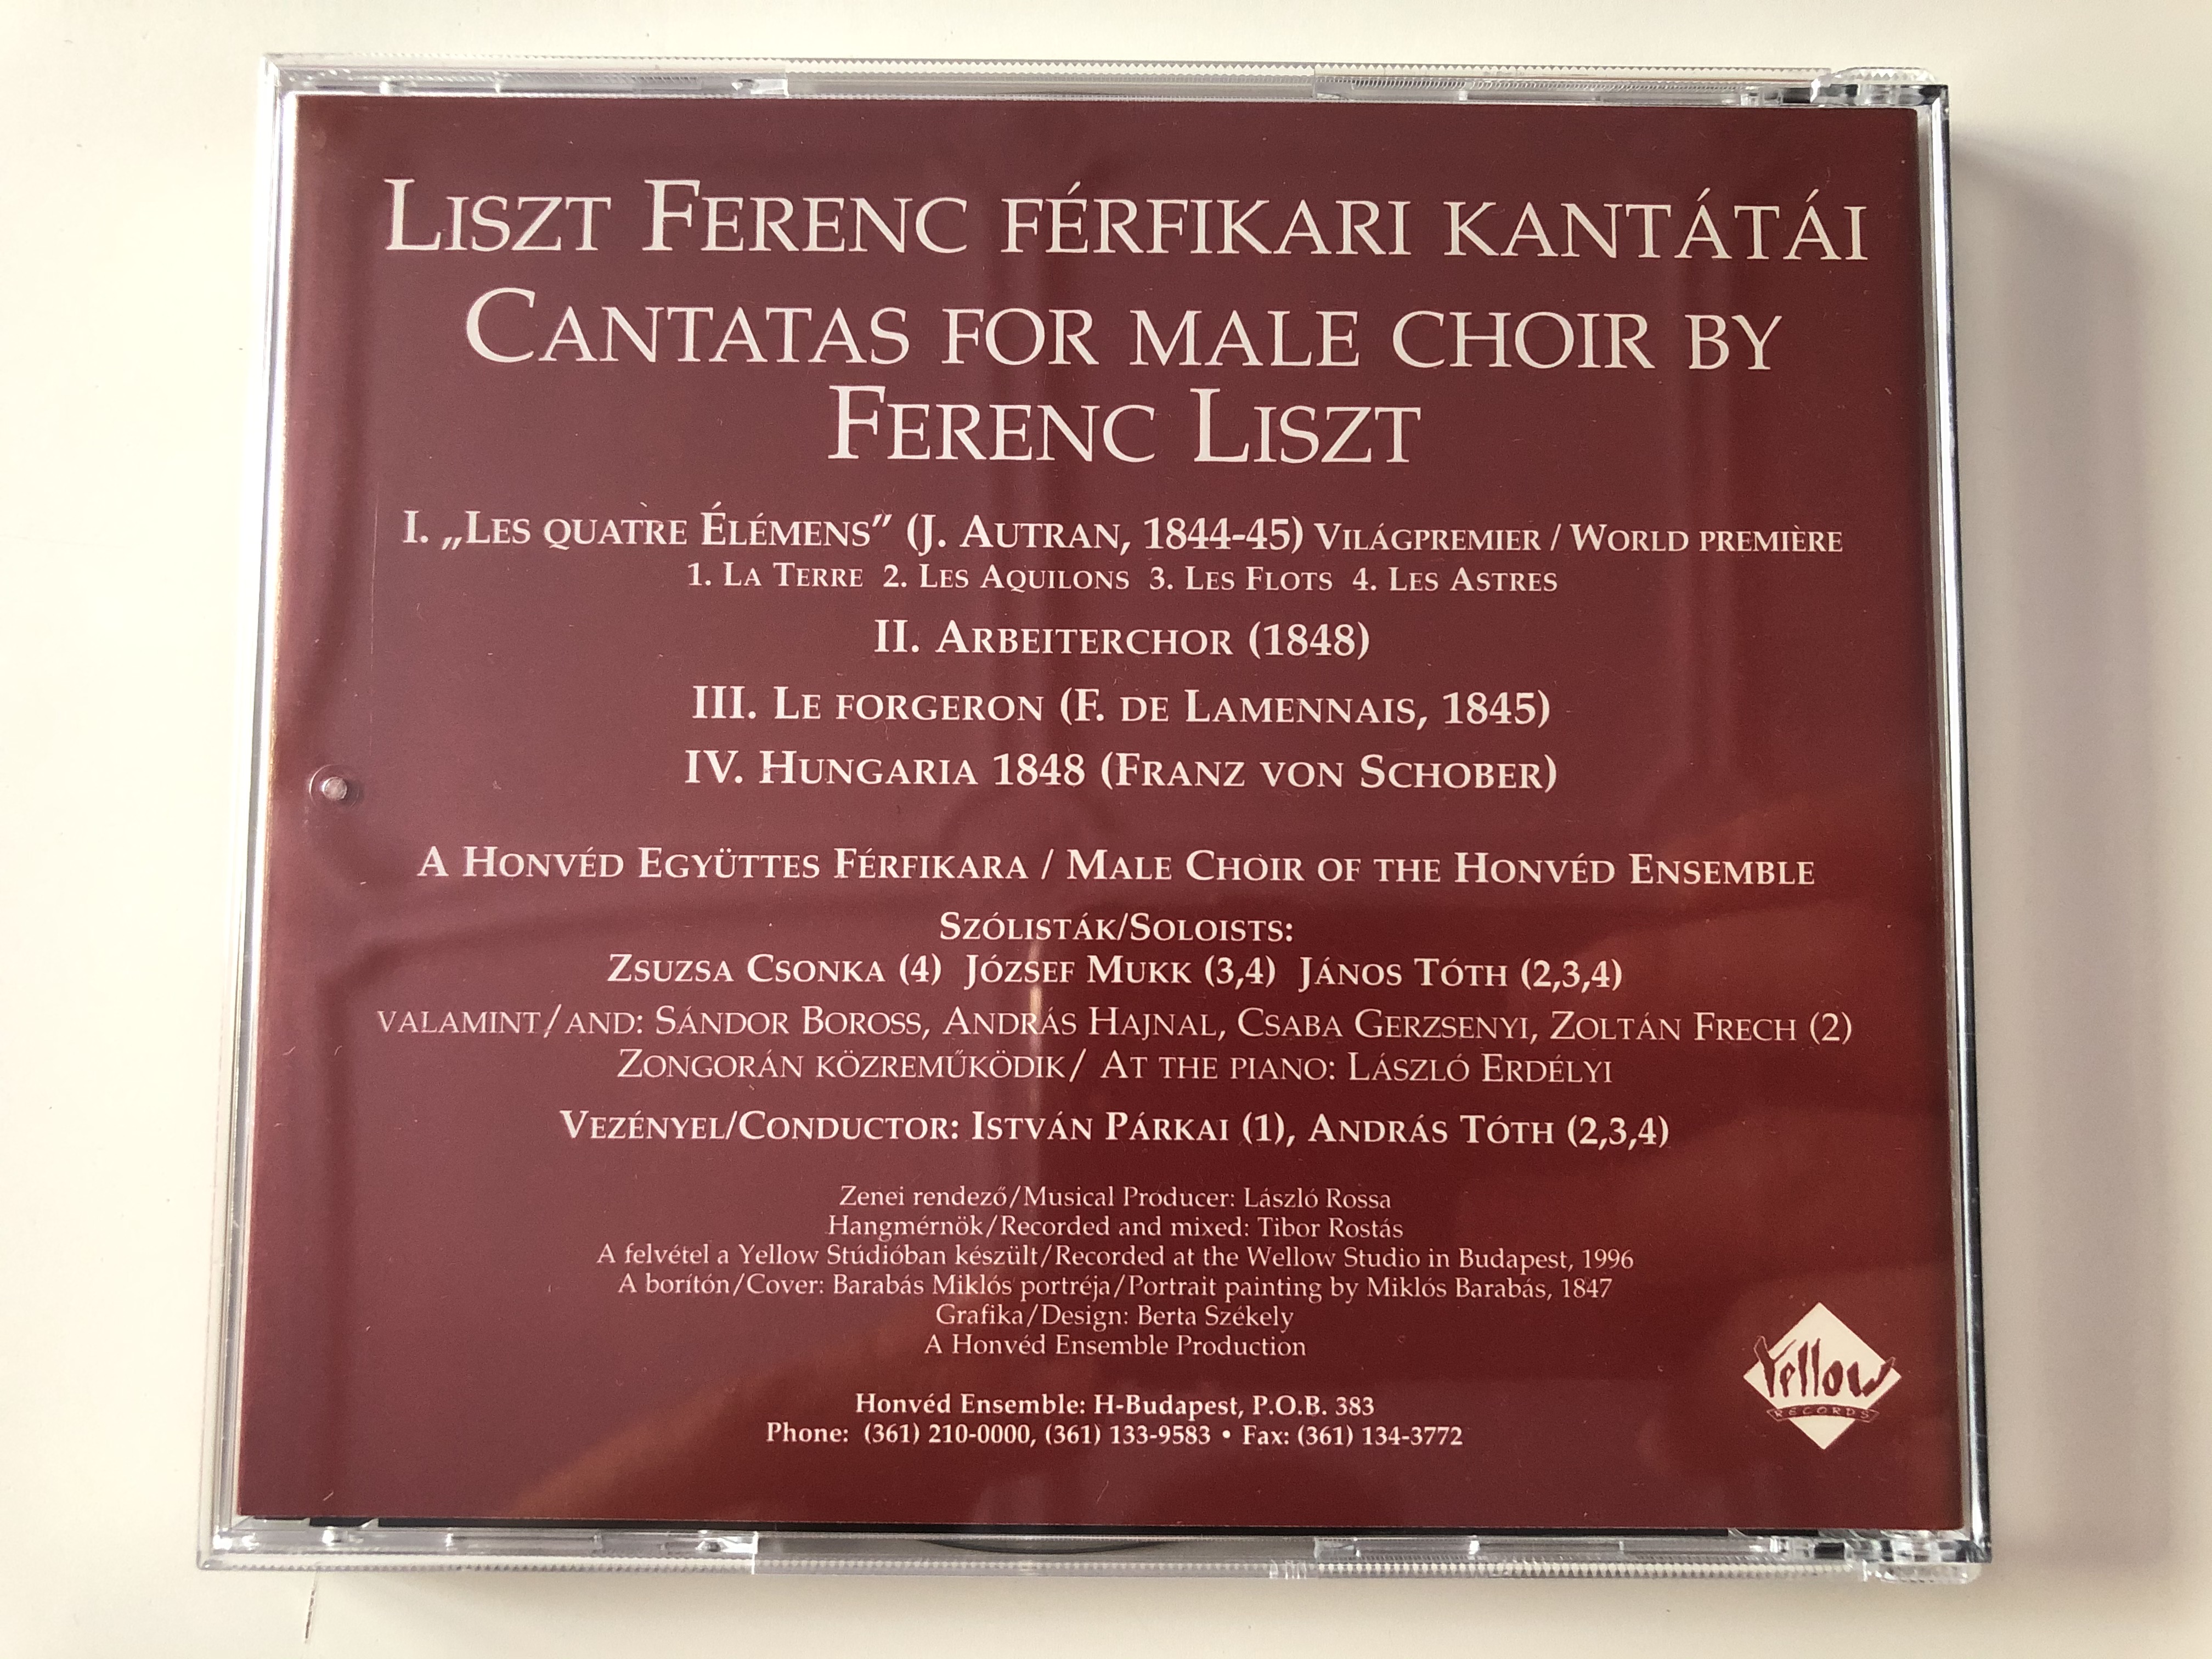 liszt-ferenc-ferfikari-kantatai-cantatas-for-male-choir-by-ferenc-liszt-honved-egyuttes-ferfikara-male-choir-of-the-honved-ensemble-yellow-records-audio-cd-1996-stereo-yrcd-27595-5-.jpg